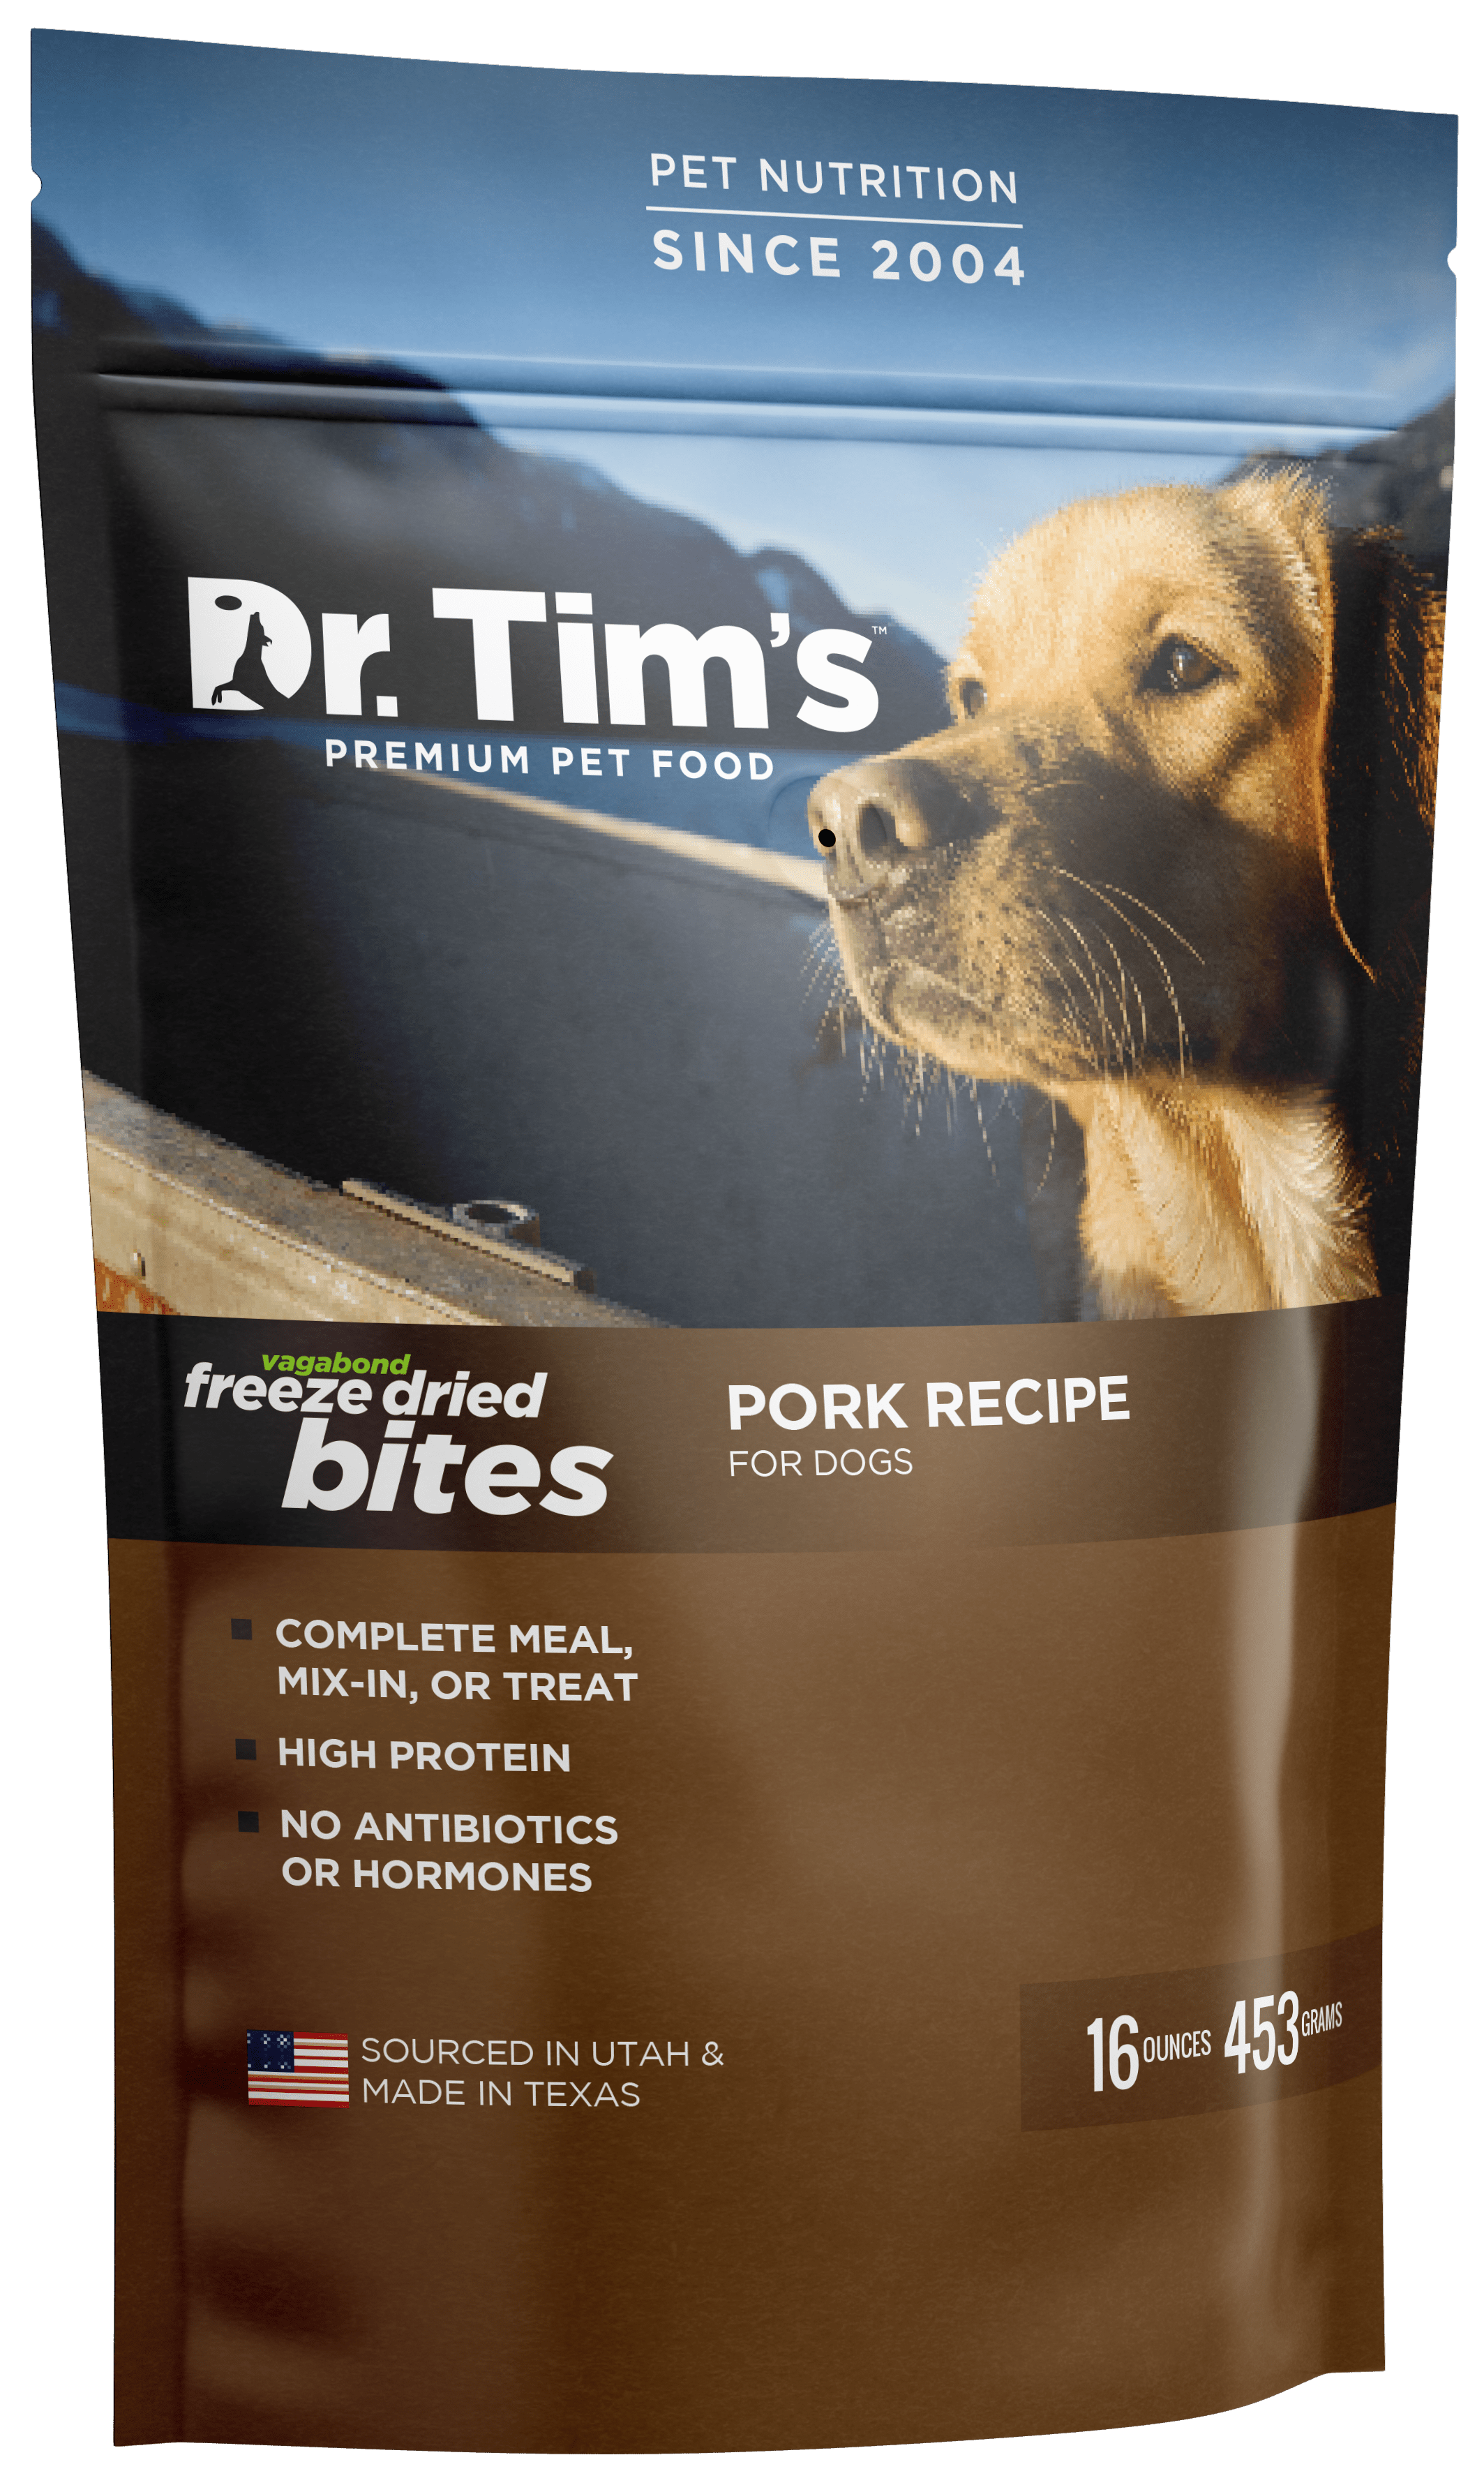 Dr. Tim's Premium Pet Food